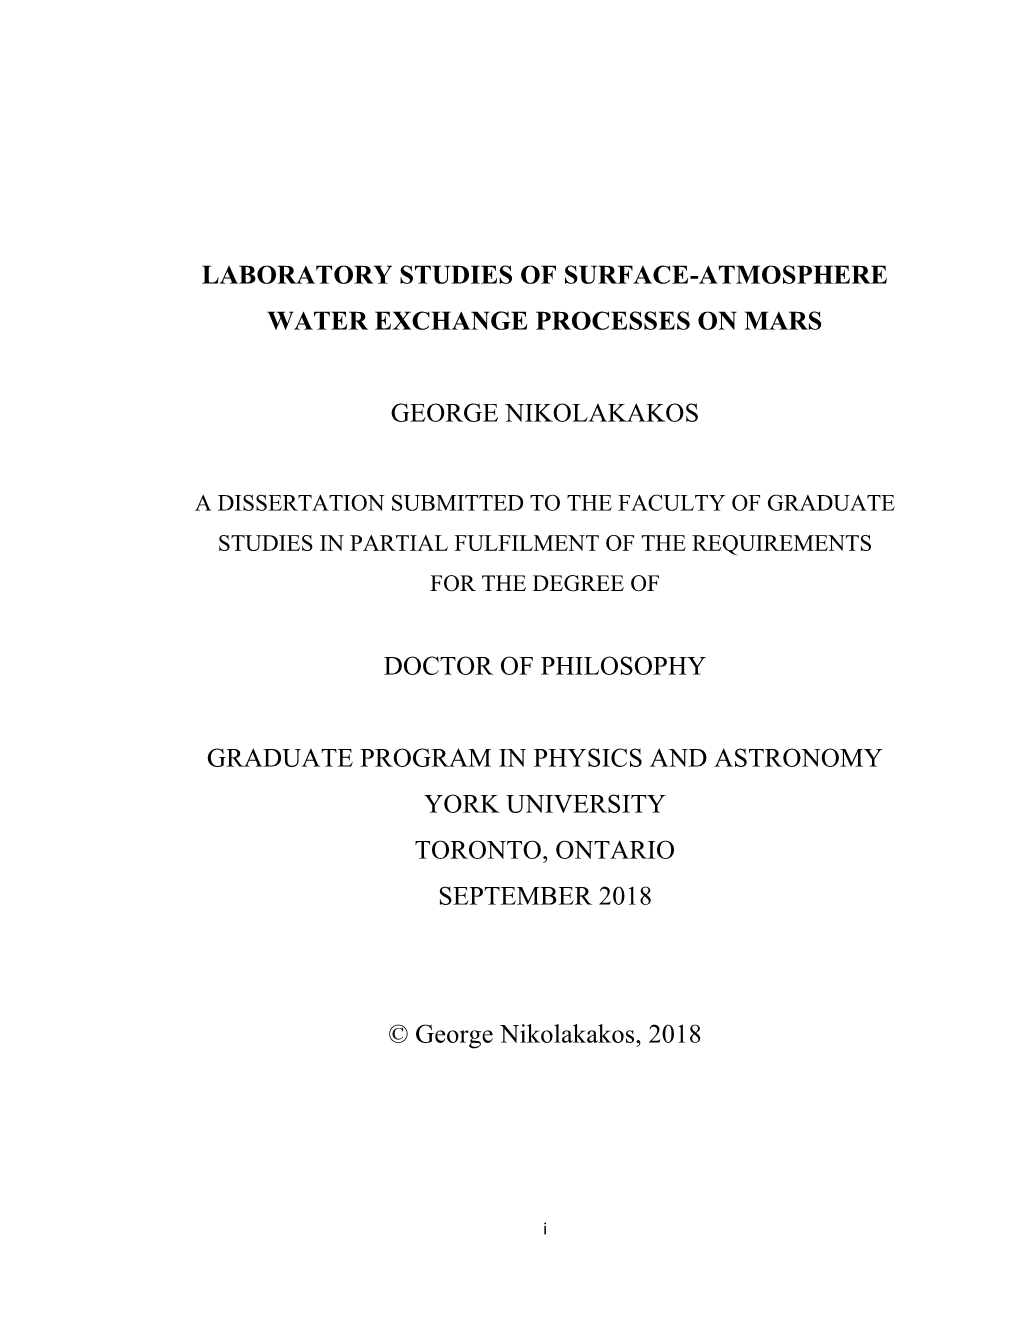 Laboratory Studies of Surface-Atmosphere Water Exchange Processes on Mars